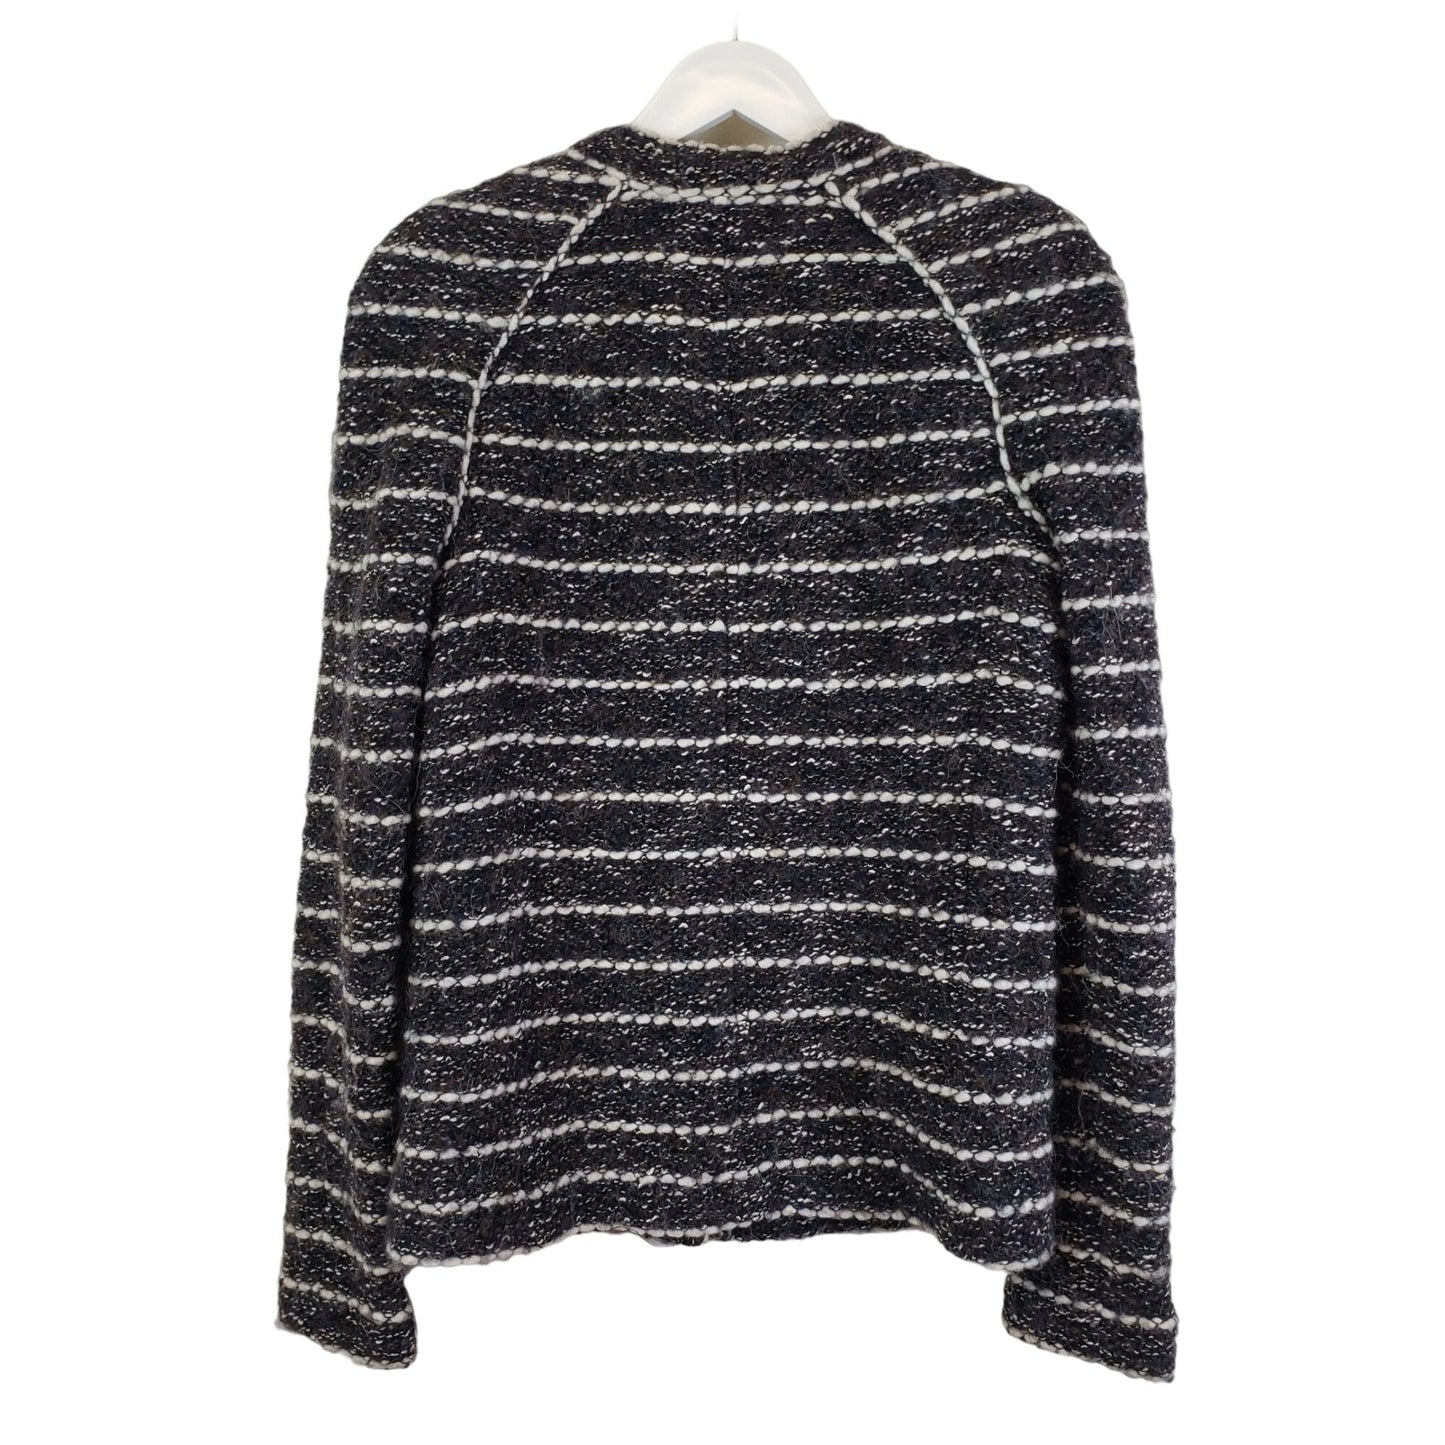 Isabel Marant Etiole Wool Blend Tweed Blazer Jacket Size Small